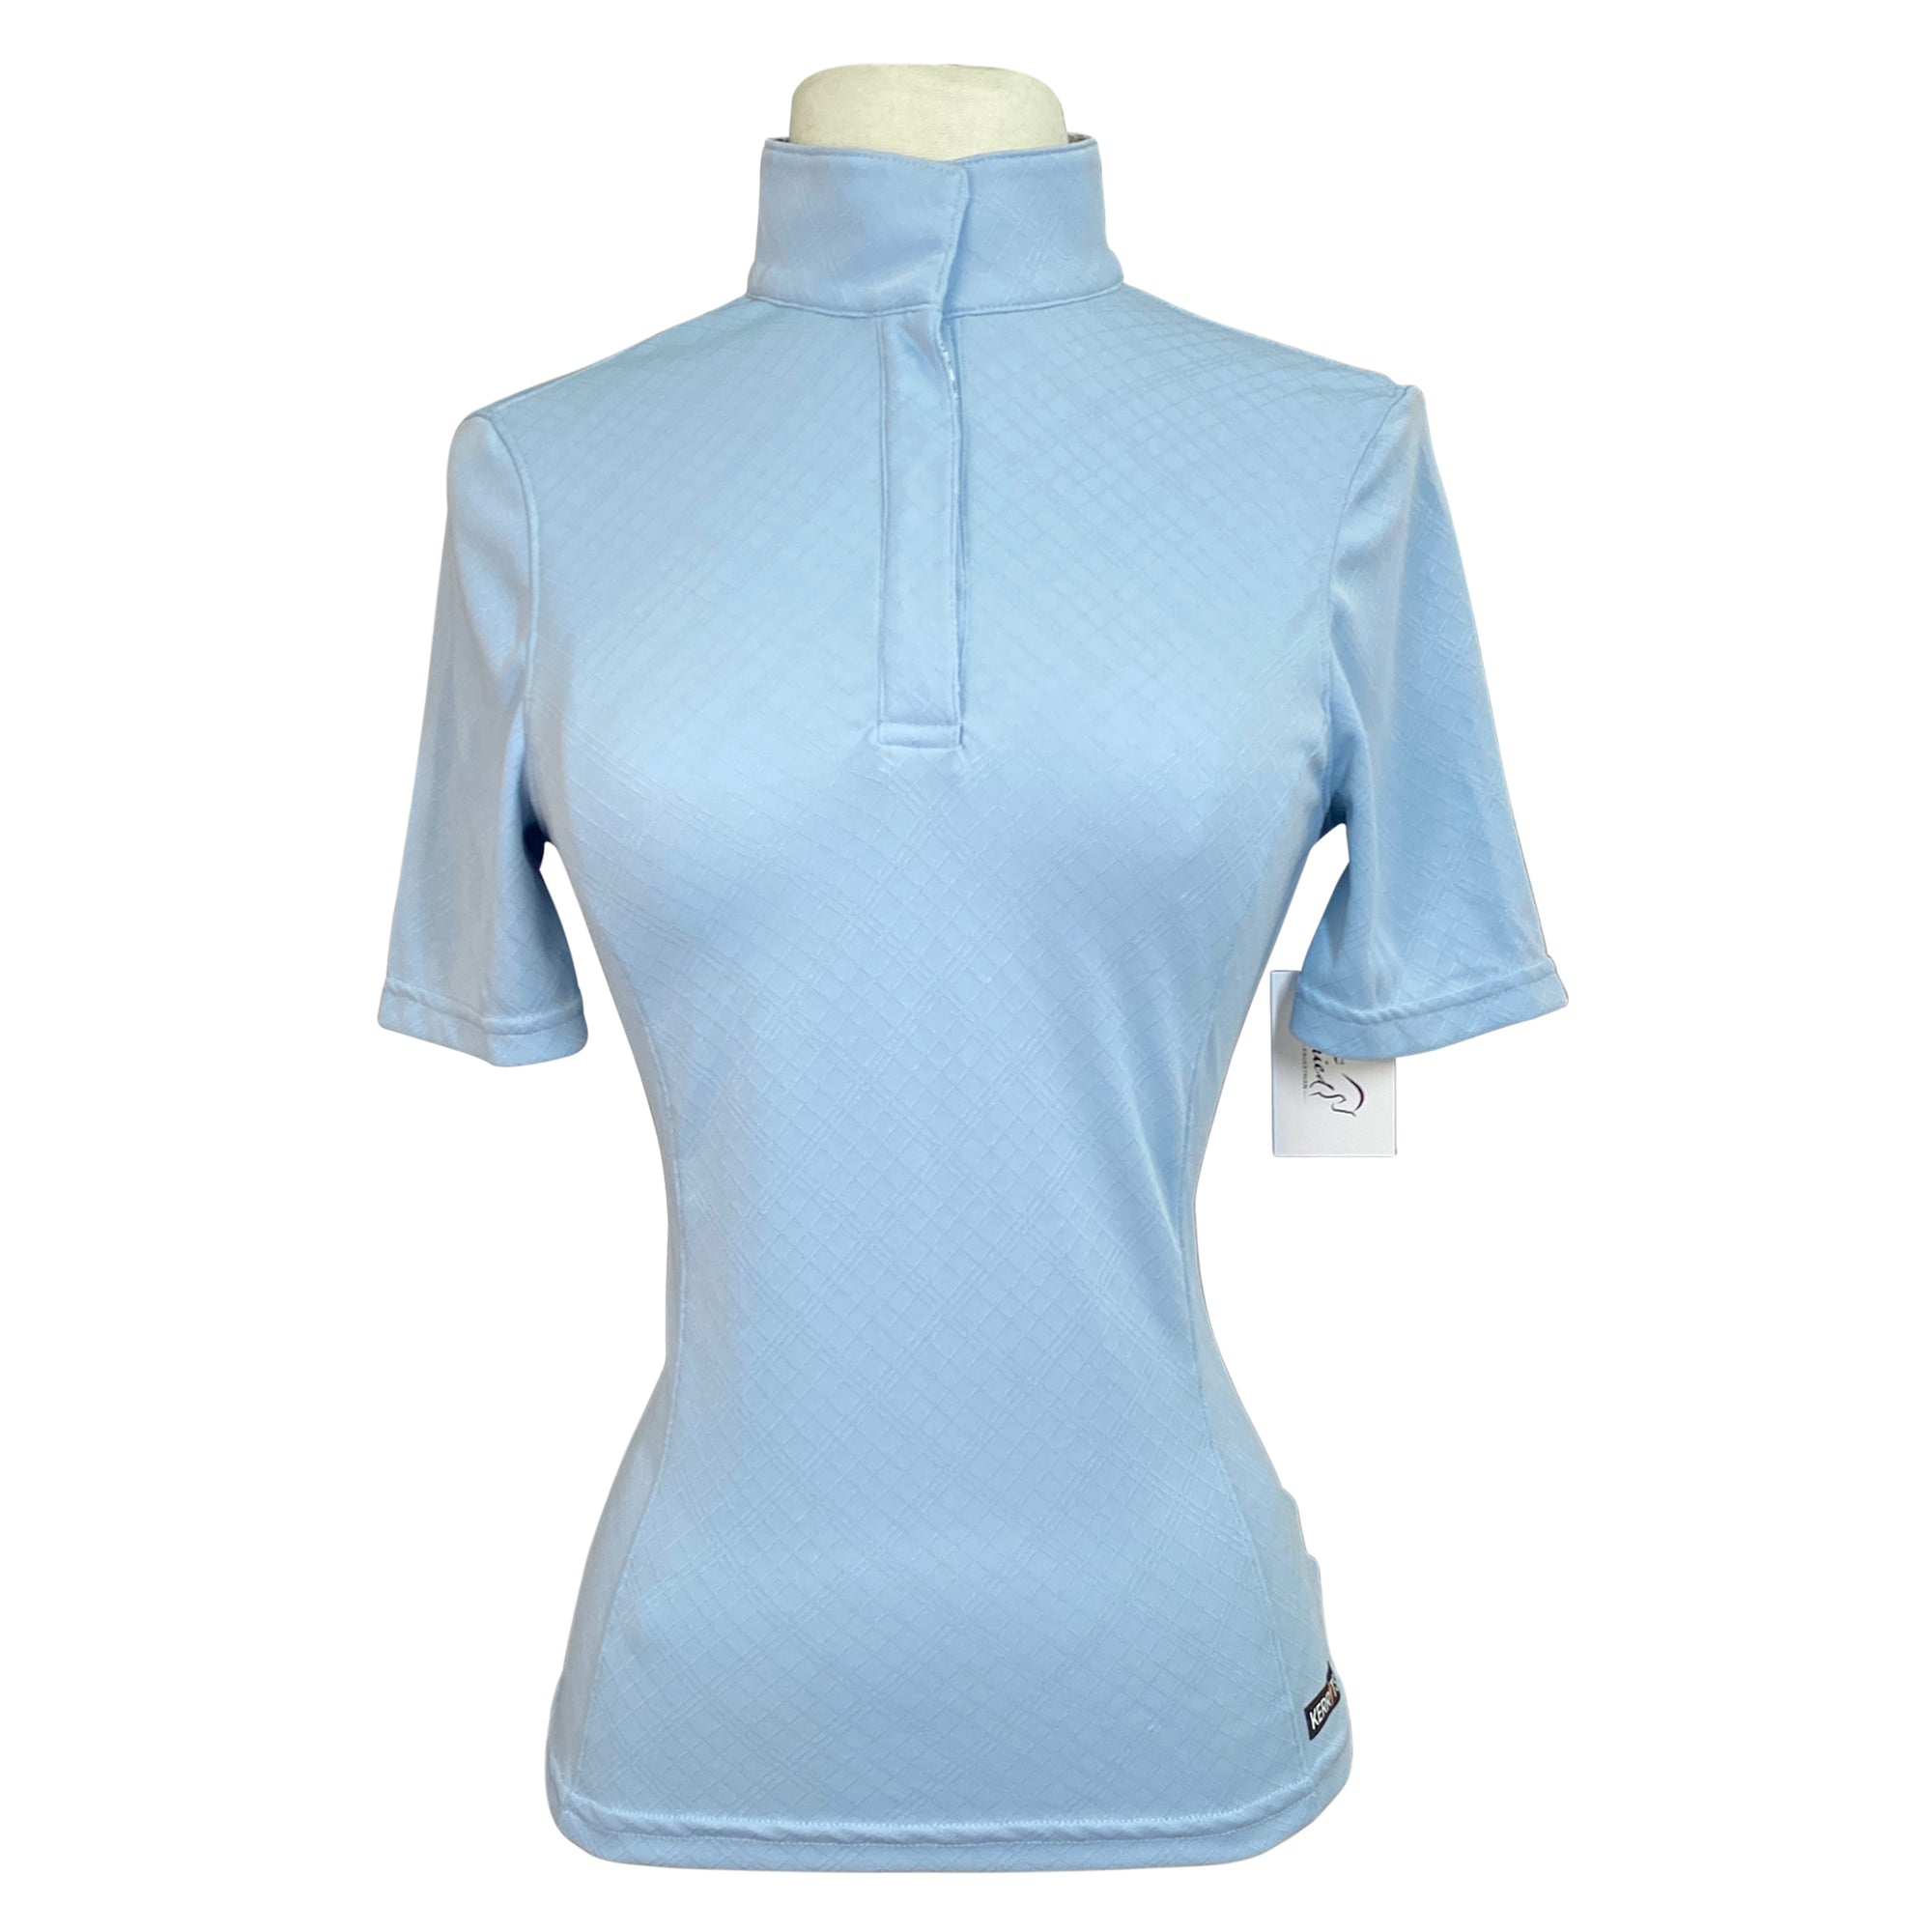 Kerrits Affinity Sleeveless Show Shirt in Light Blue